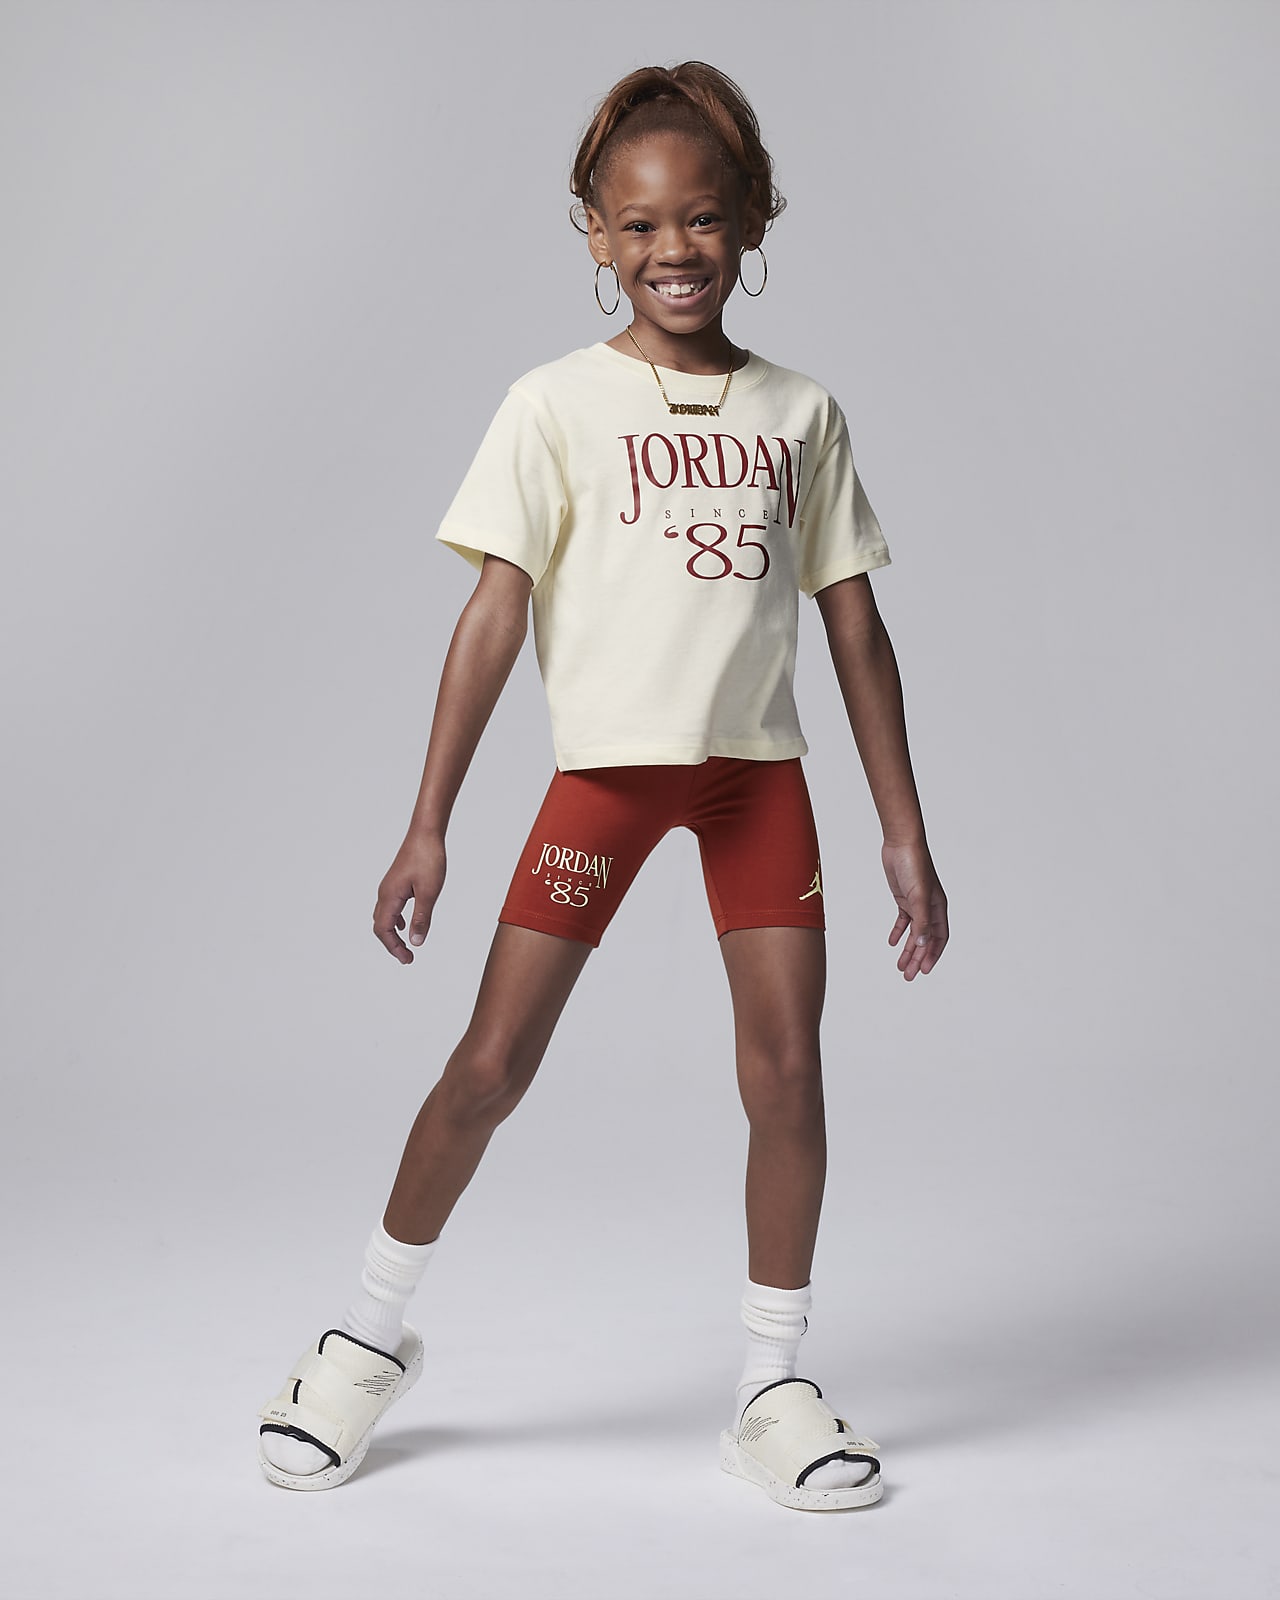 Jordan Brooklyn Mini Me Conjunto de mallas de ciclismo - Niño/a pequeño/a